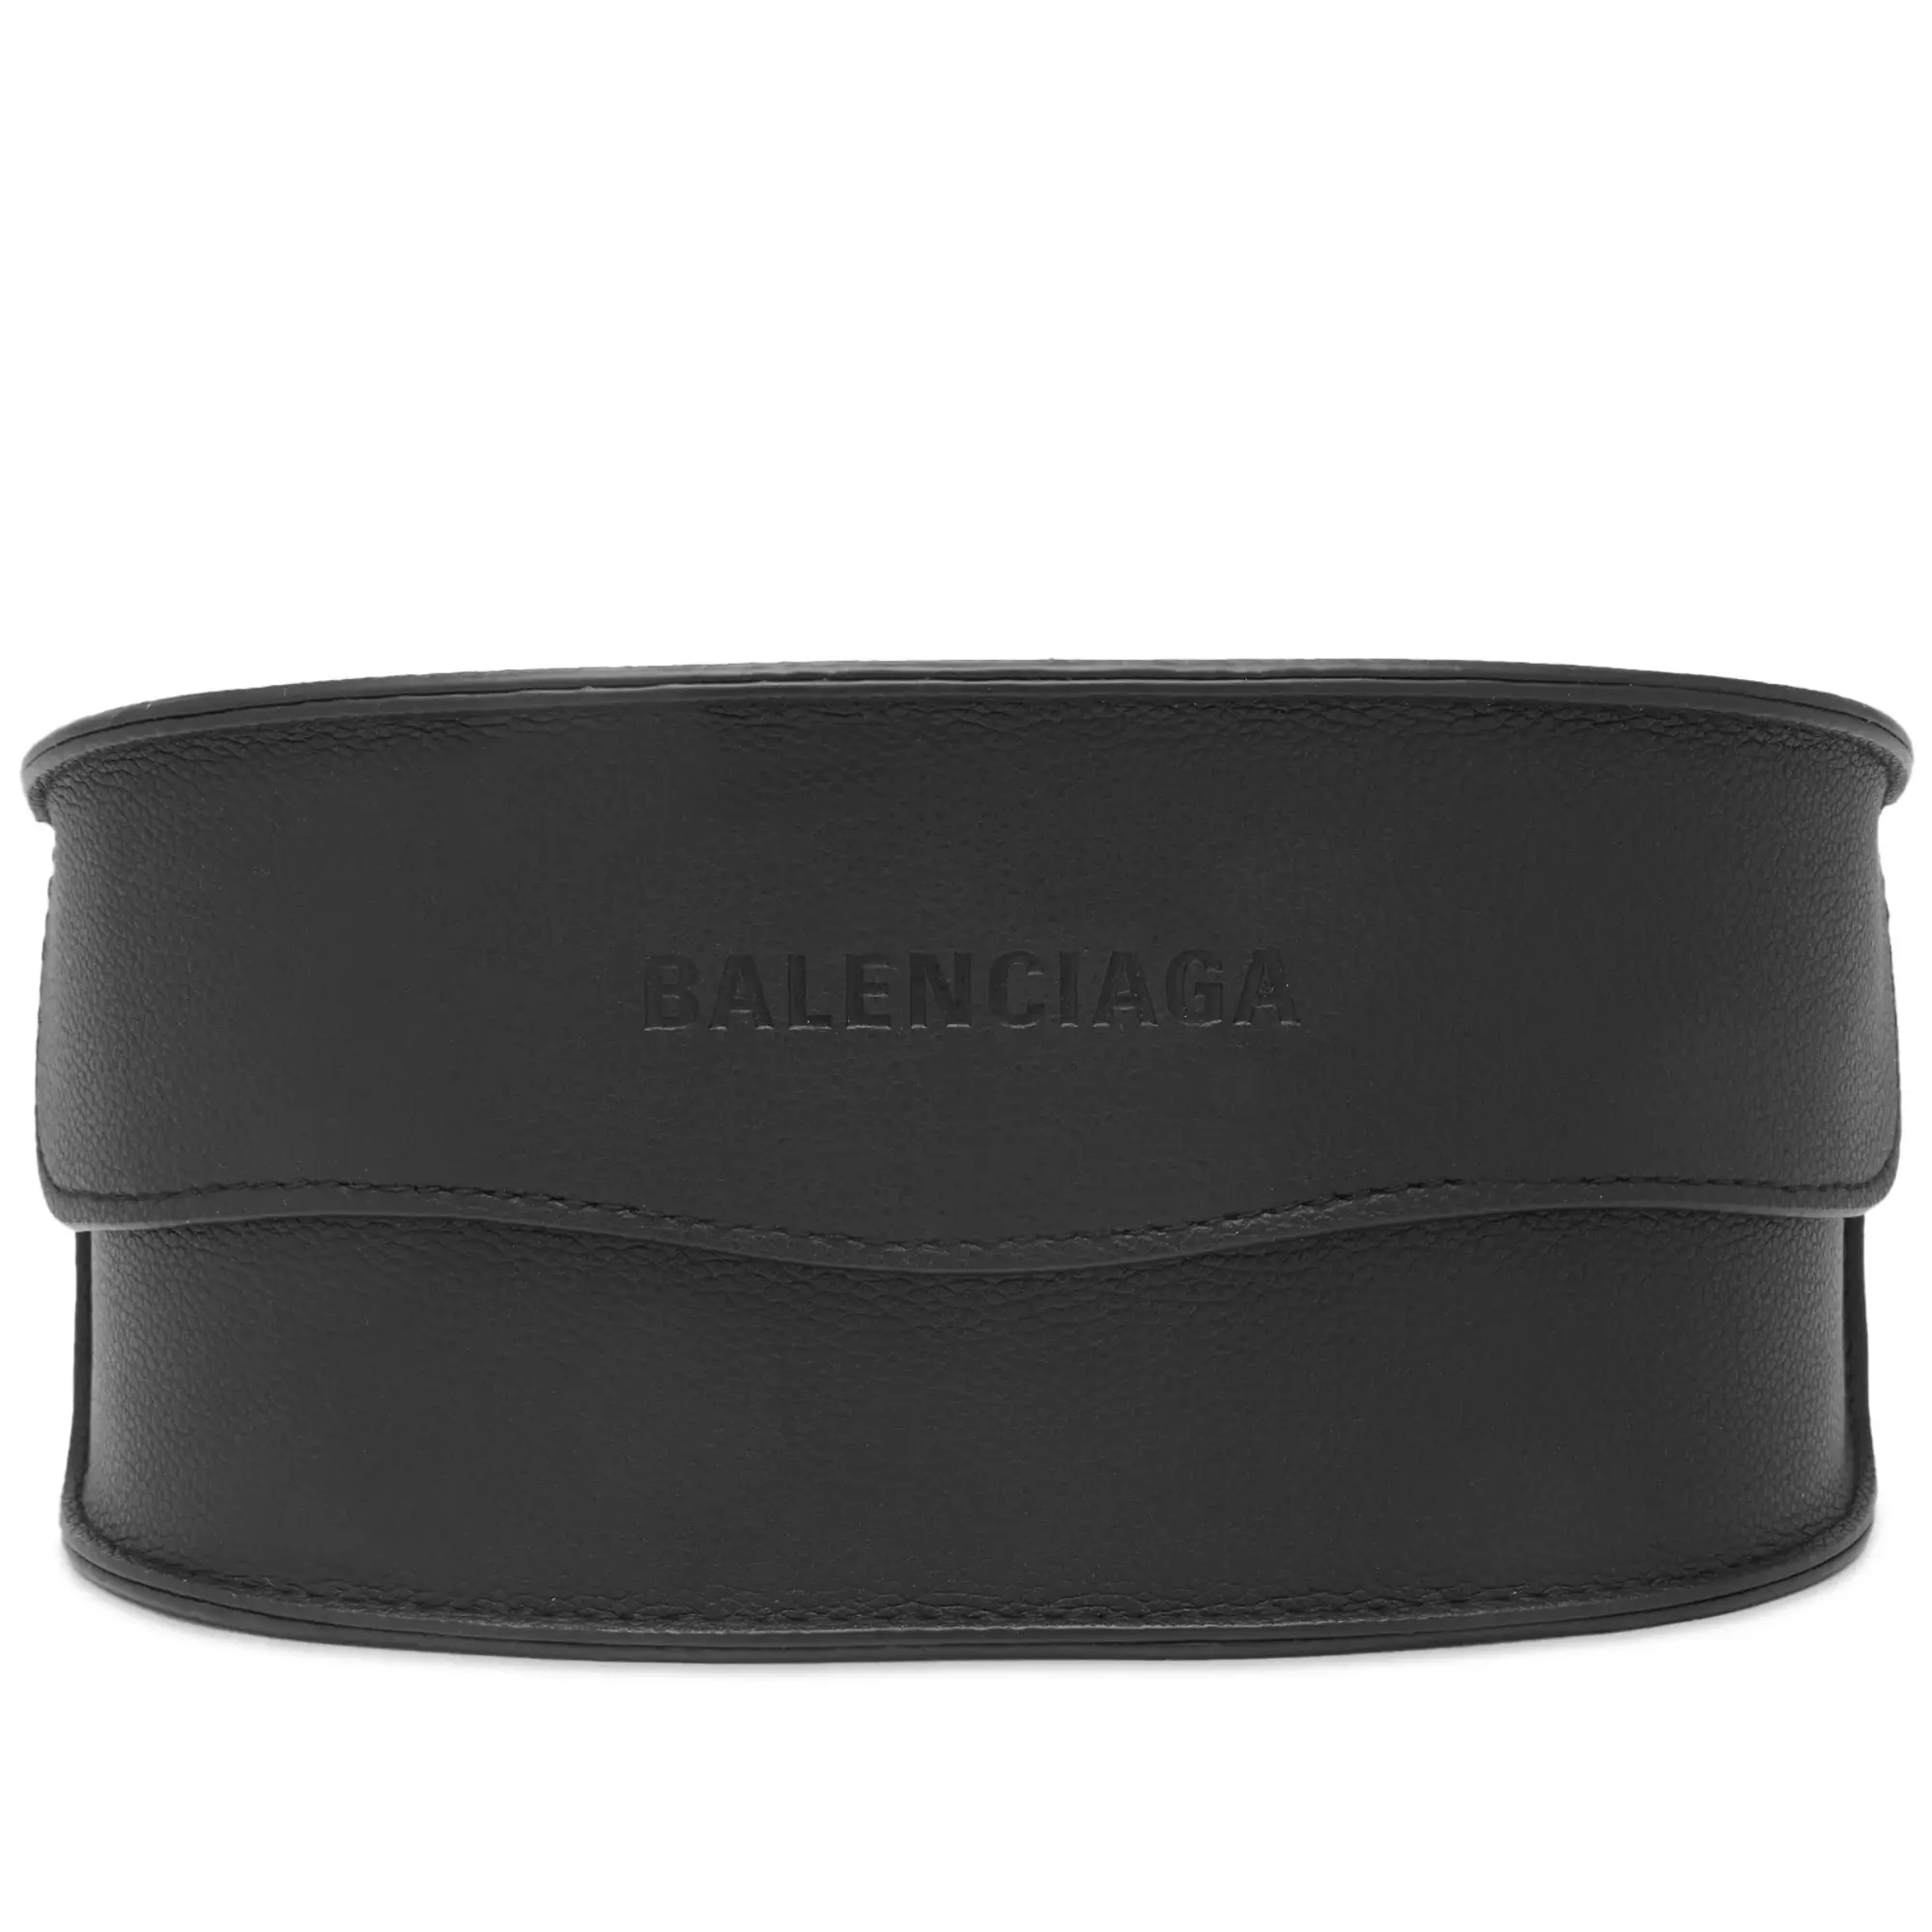 Balenciaga Eyewear BB0253S Sunglasses Brown/Grey